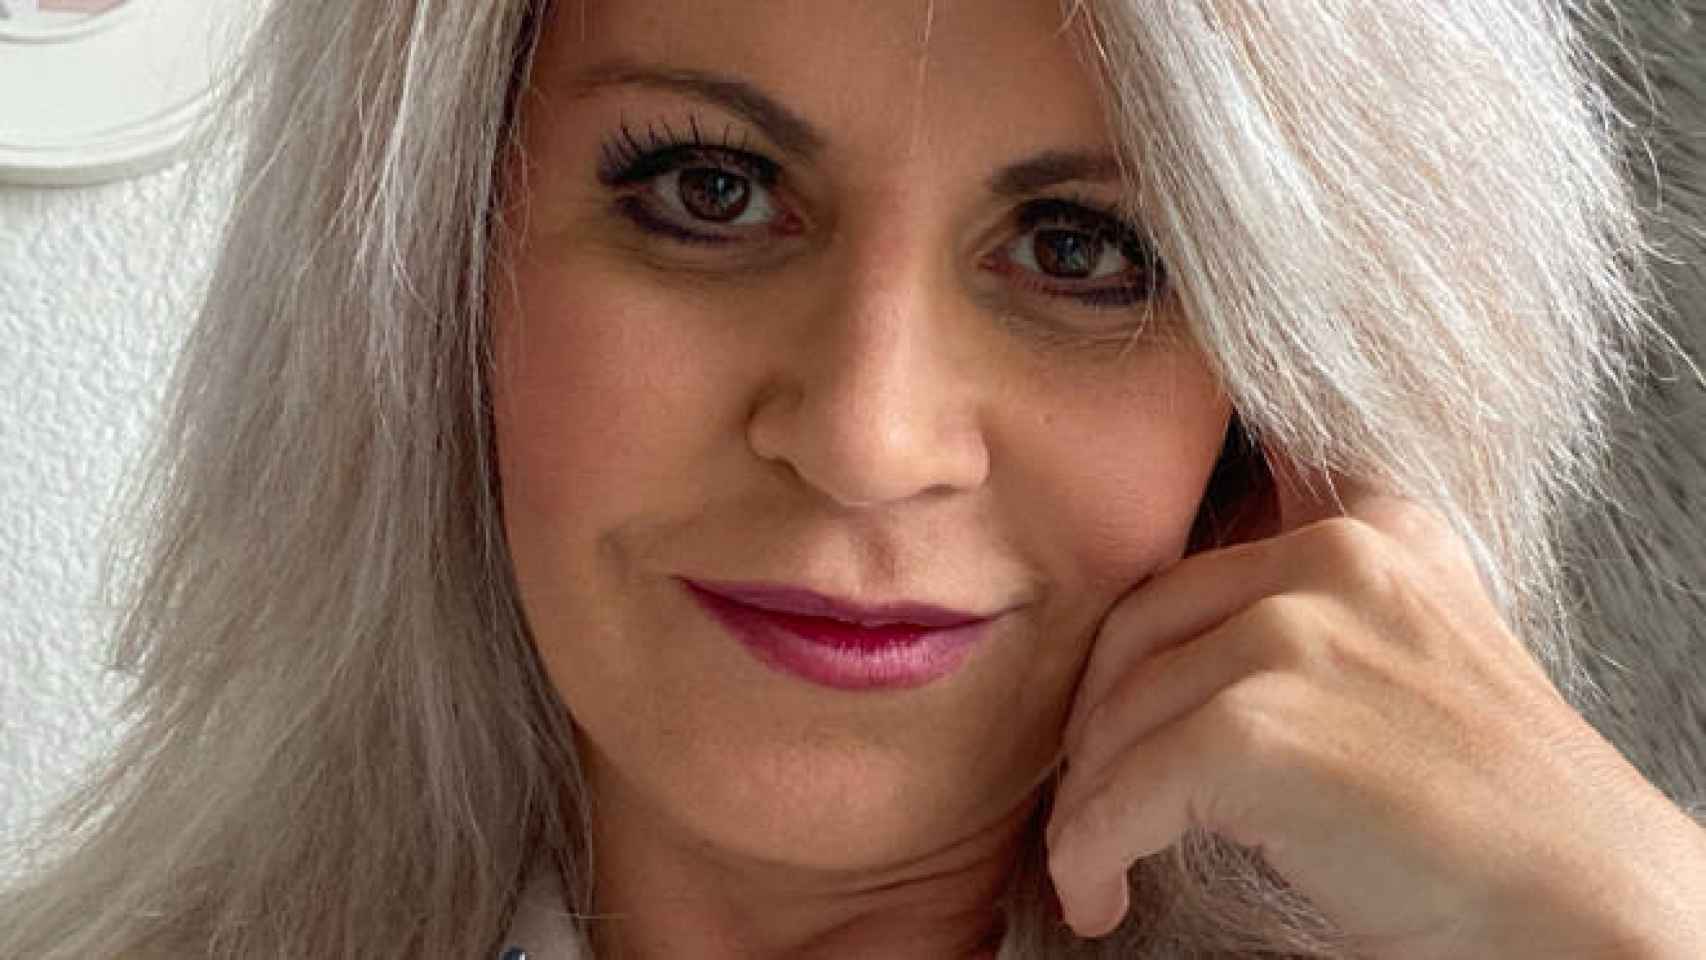 La psicóloga y sexóloga Ana M. Ángel Esteban